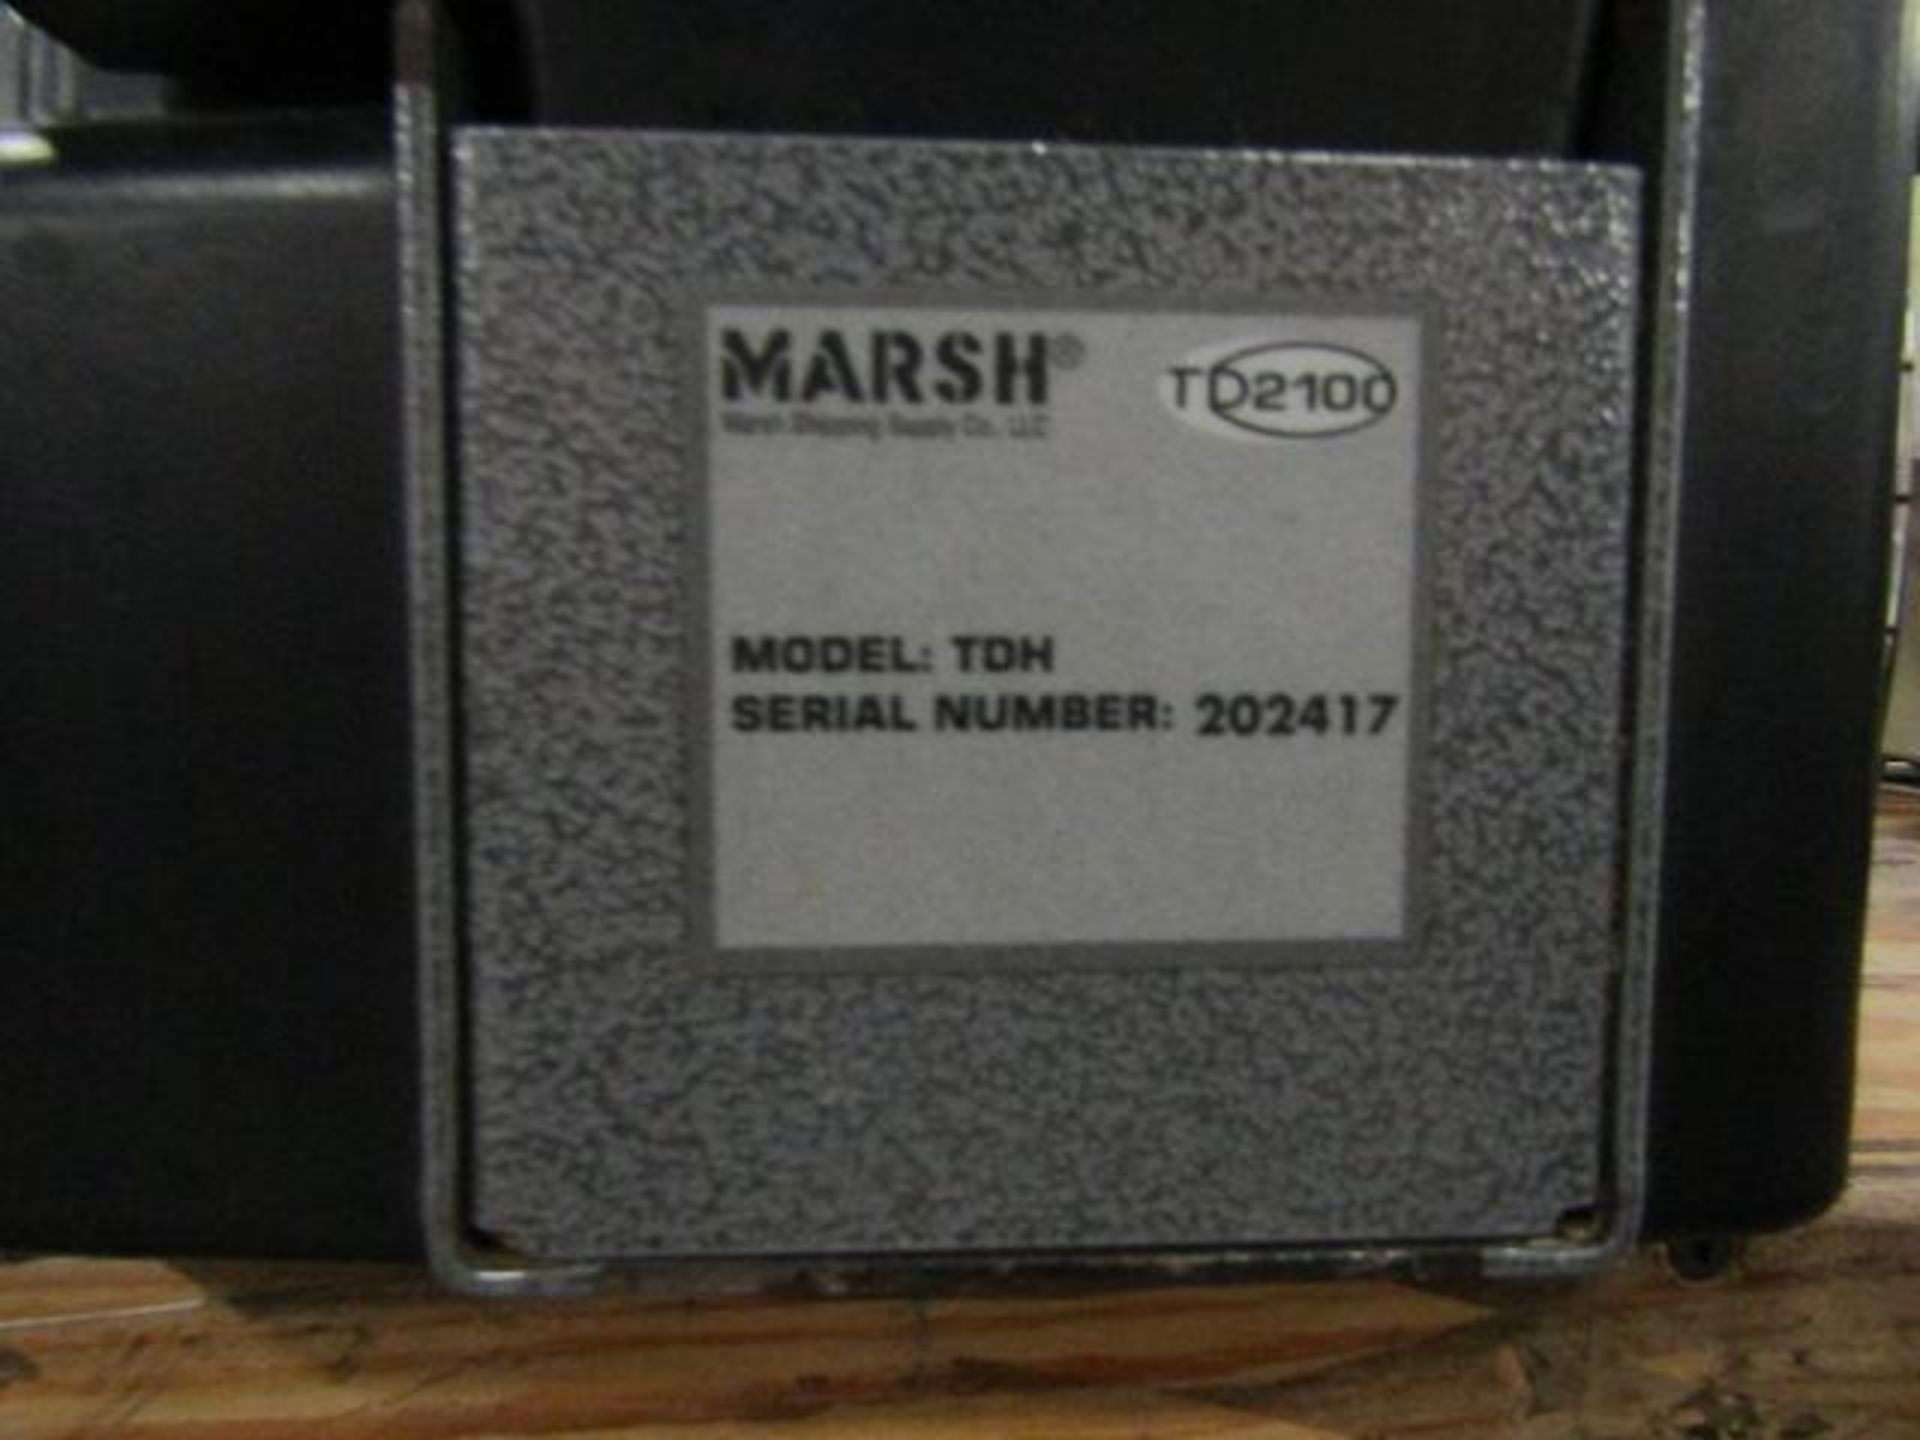 Marsh Tape Applicator - Image 2 of 2